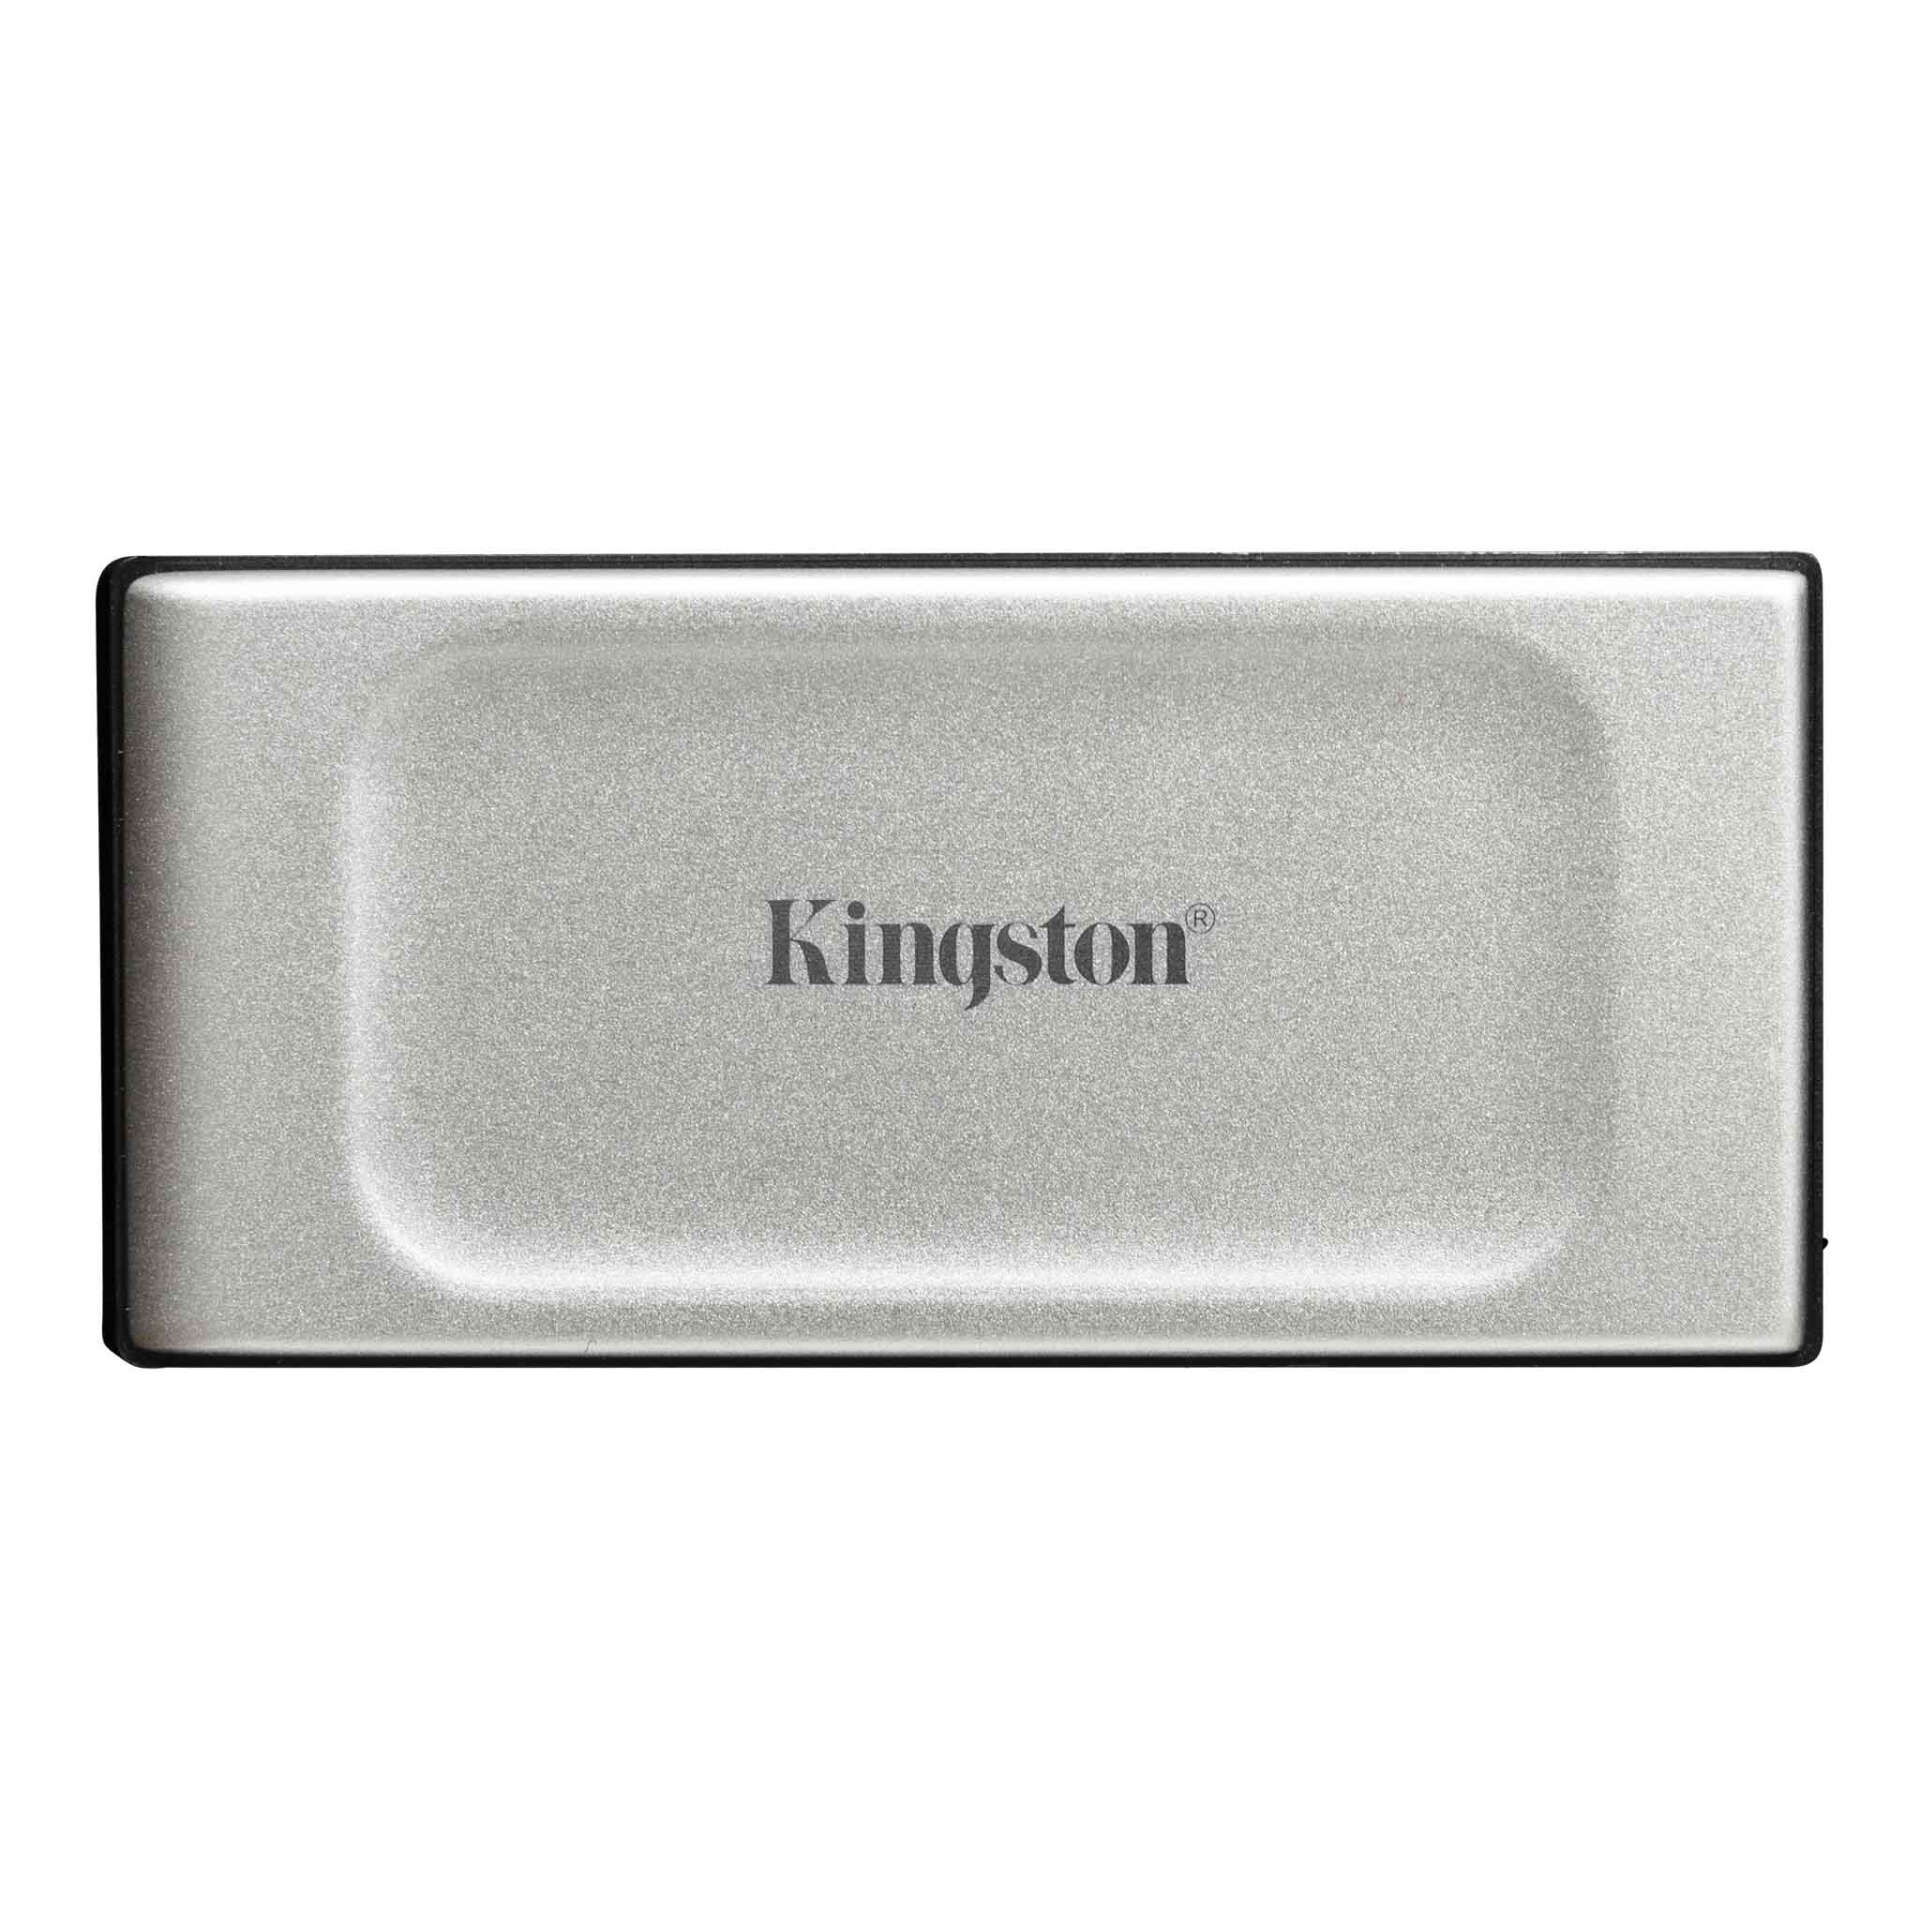 Kingston technology xs2000 2000 gb fekete, ezüst